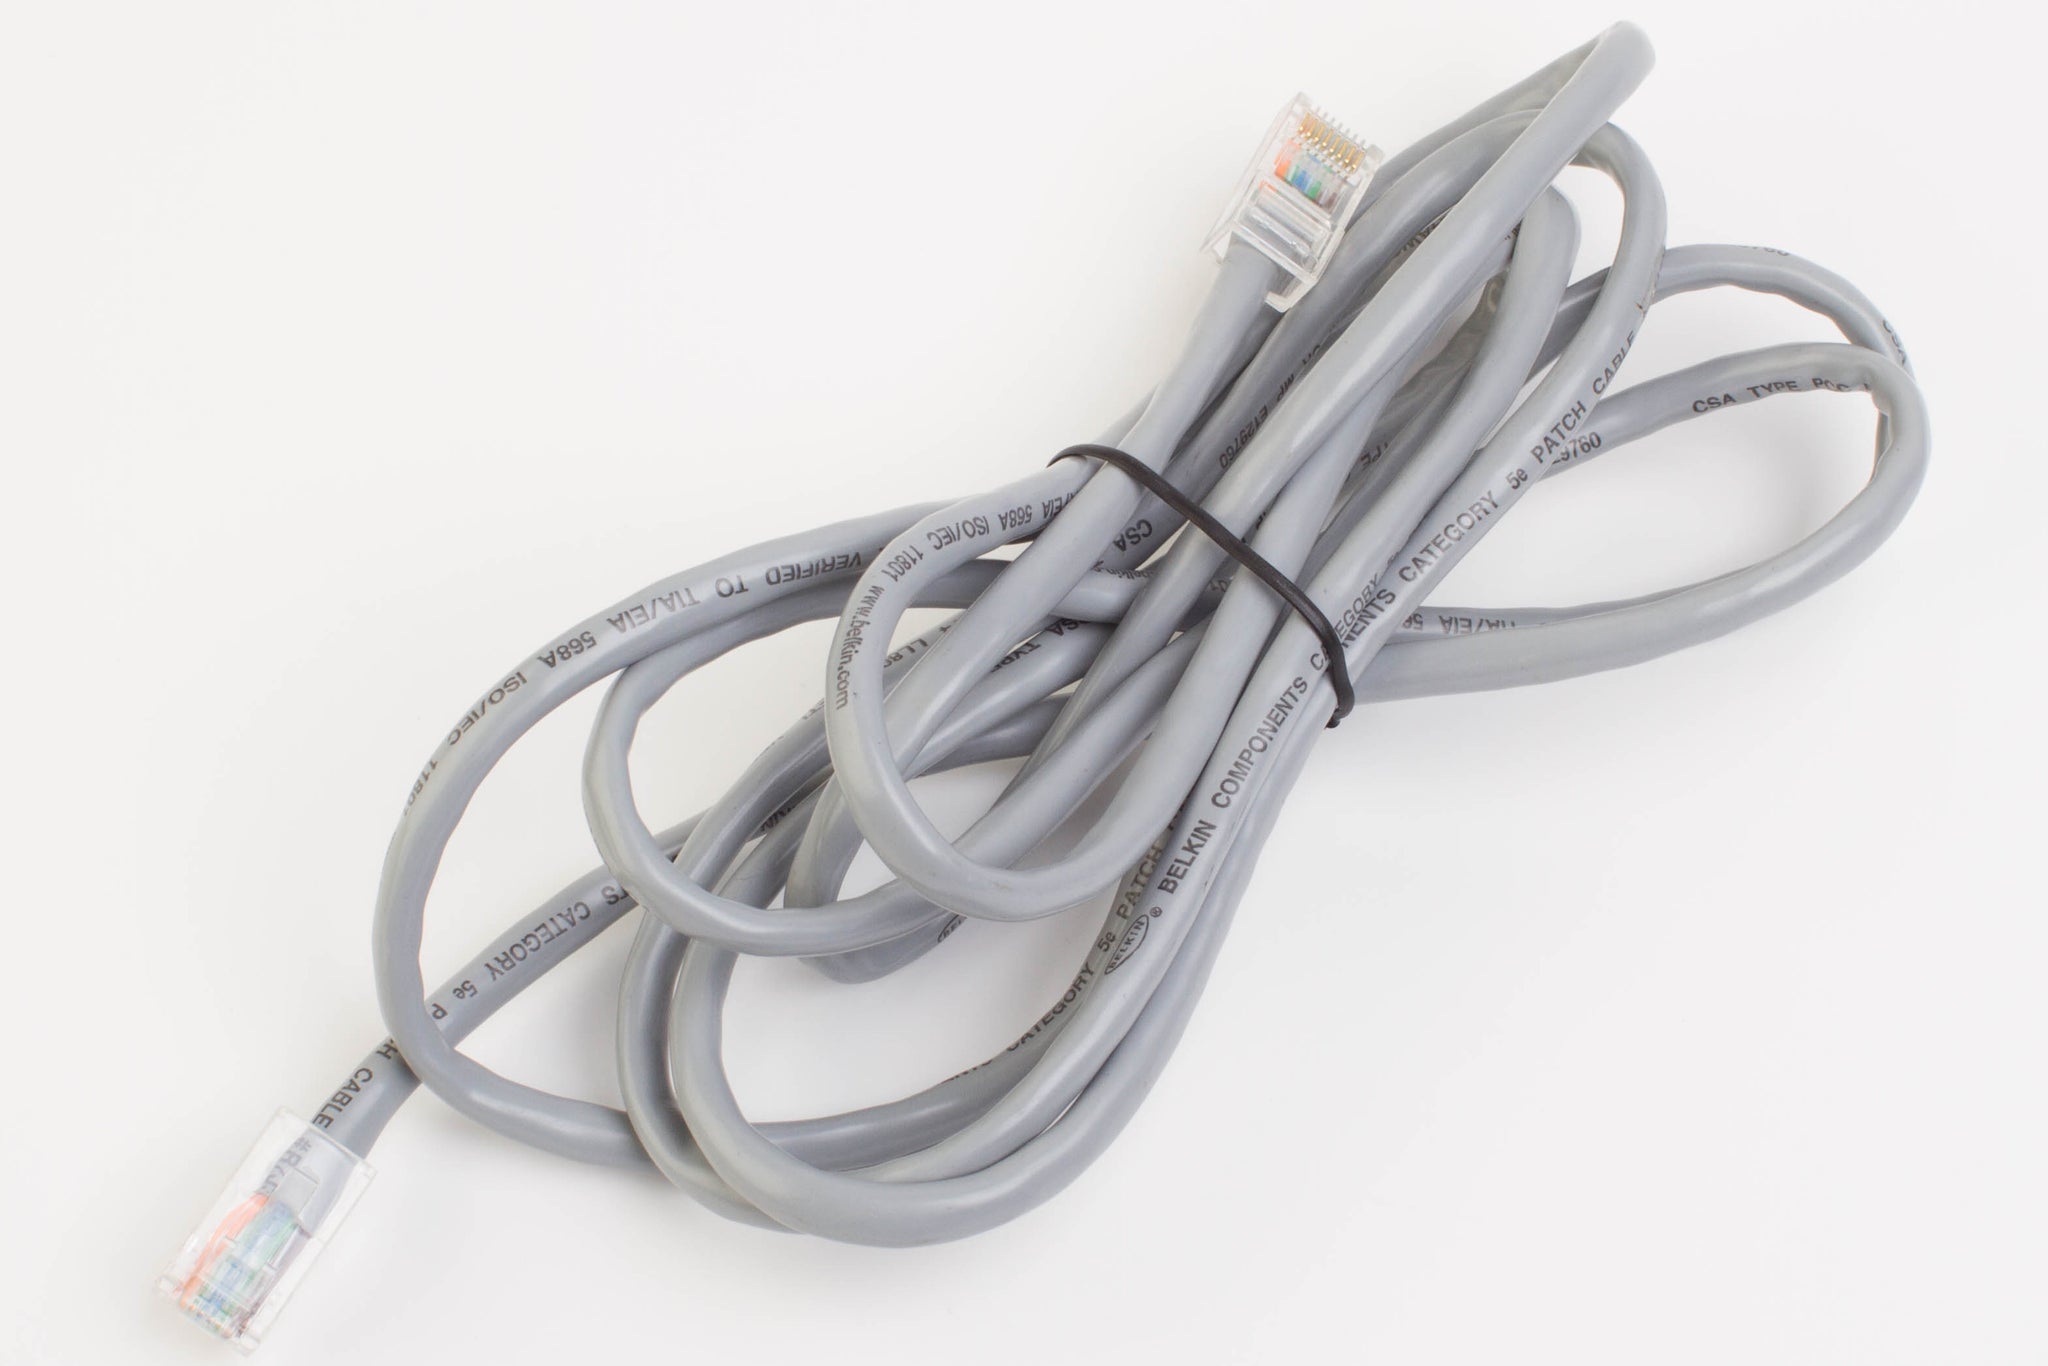 6ft Ethernet cable for link LED Light controllers | LEDUpdates